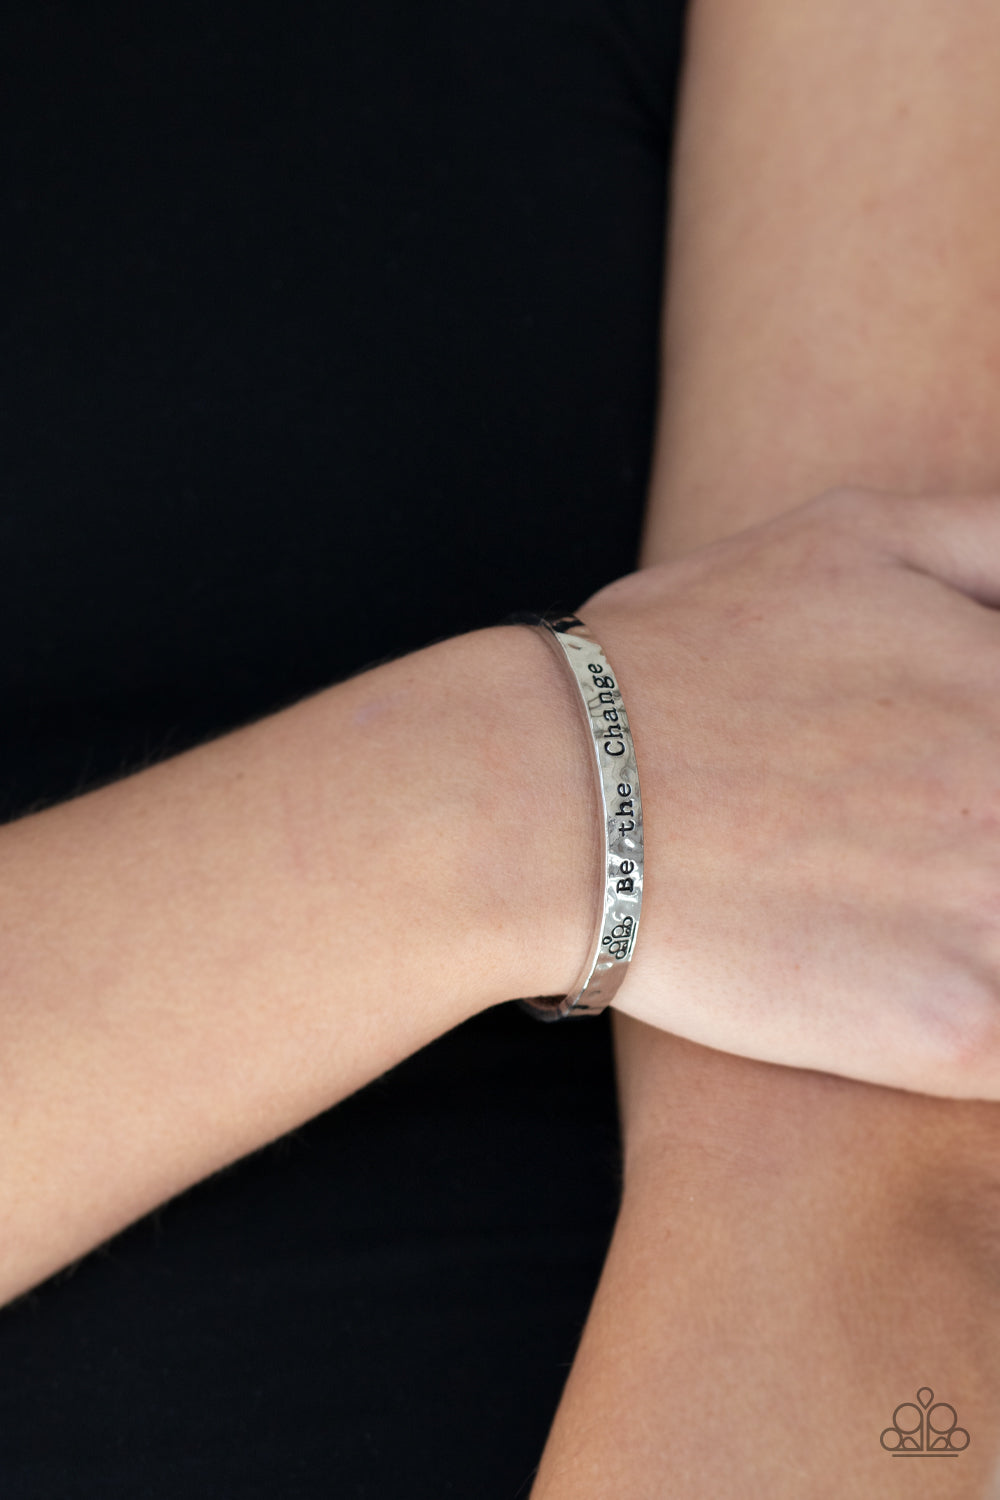 Be The Change Silver
Cuff Bracelet - Daria's Blings N Things